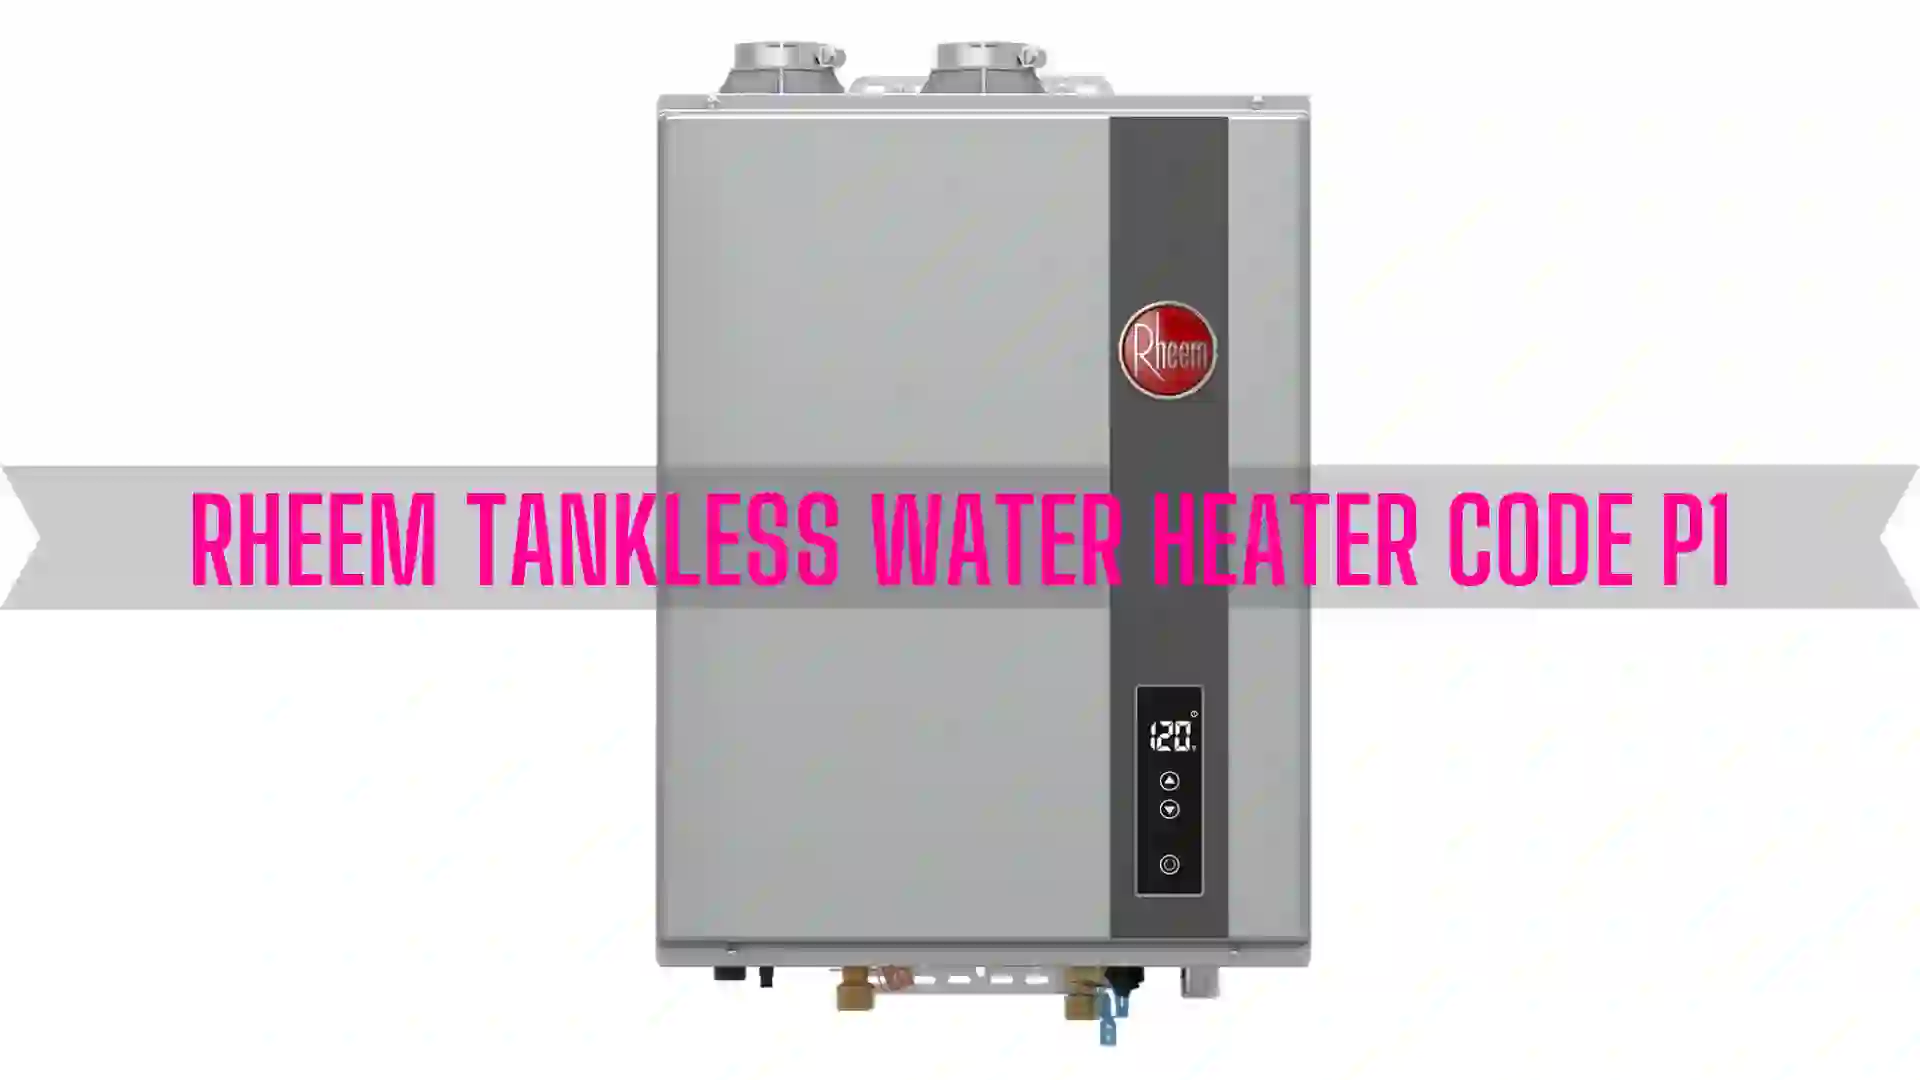 Rheem Tankless Water Heater Code P1